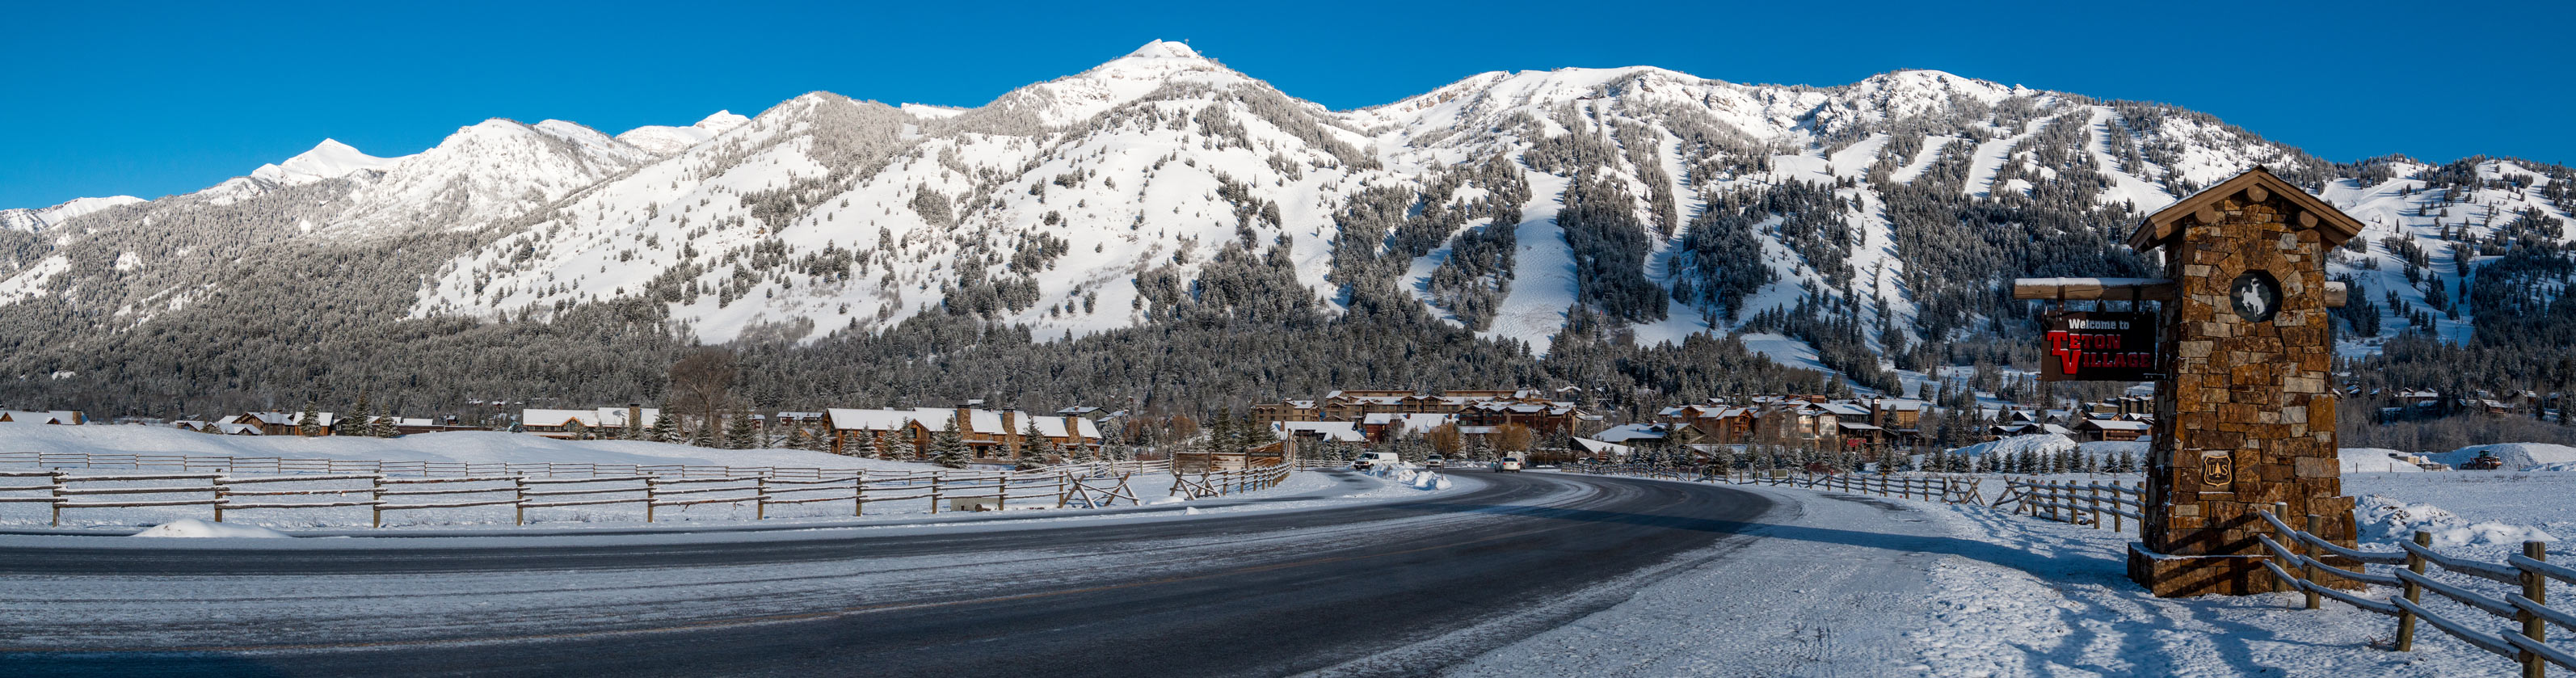 Highway view of Teton Mountain village in winter